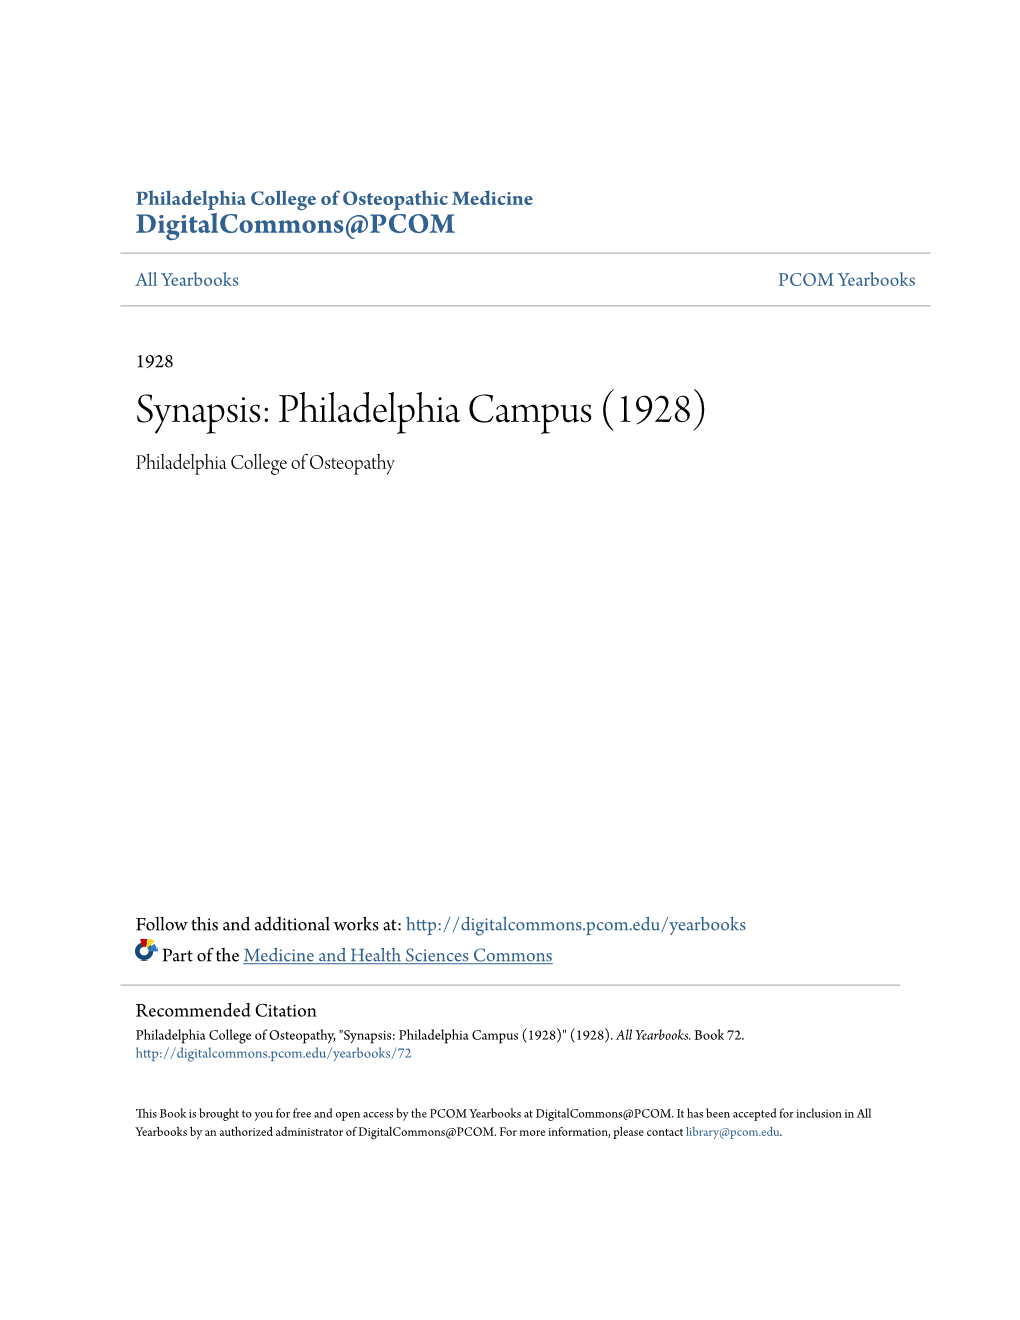 Synapsis: Philadelphia Campus (1928) Philadelphia College of Osteopathy